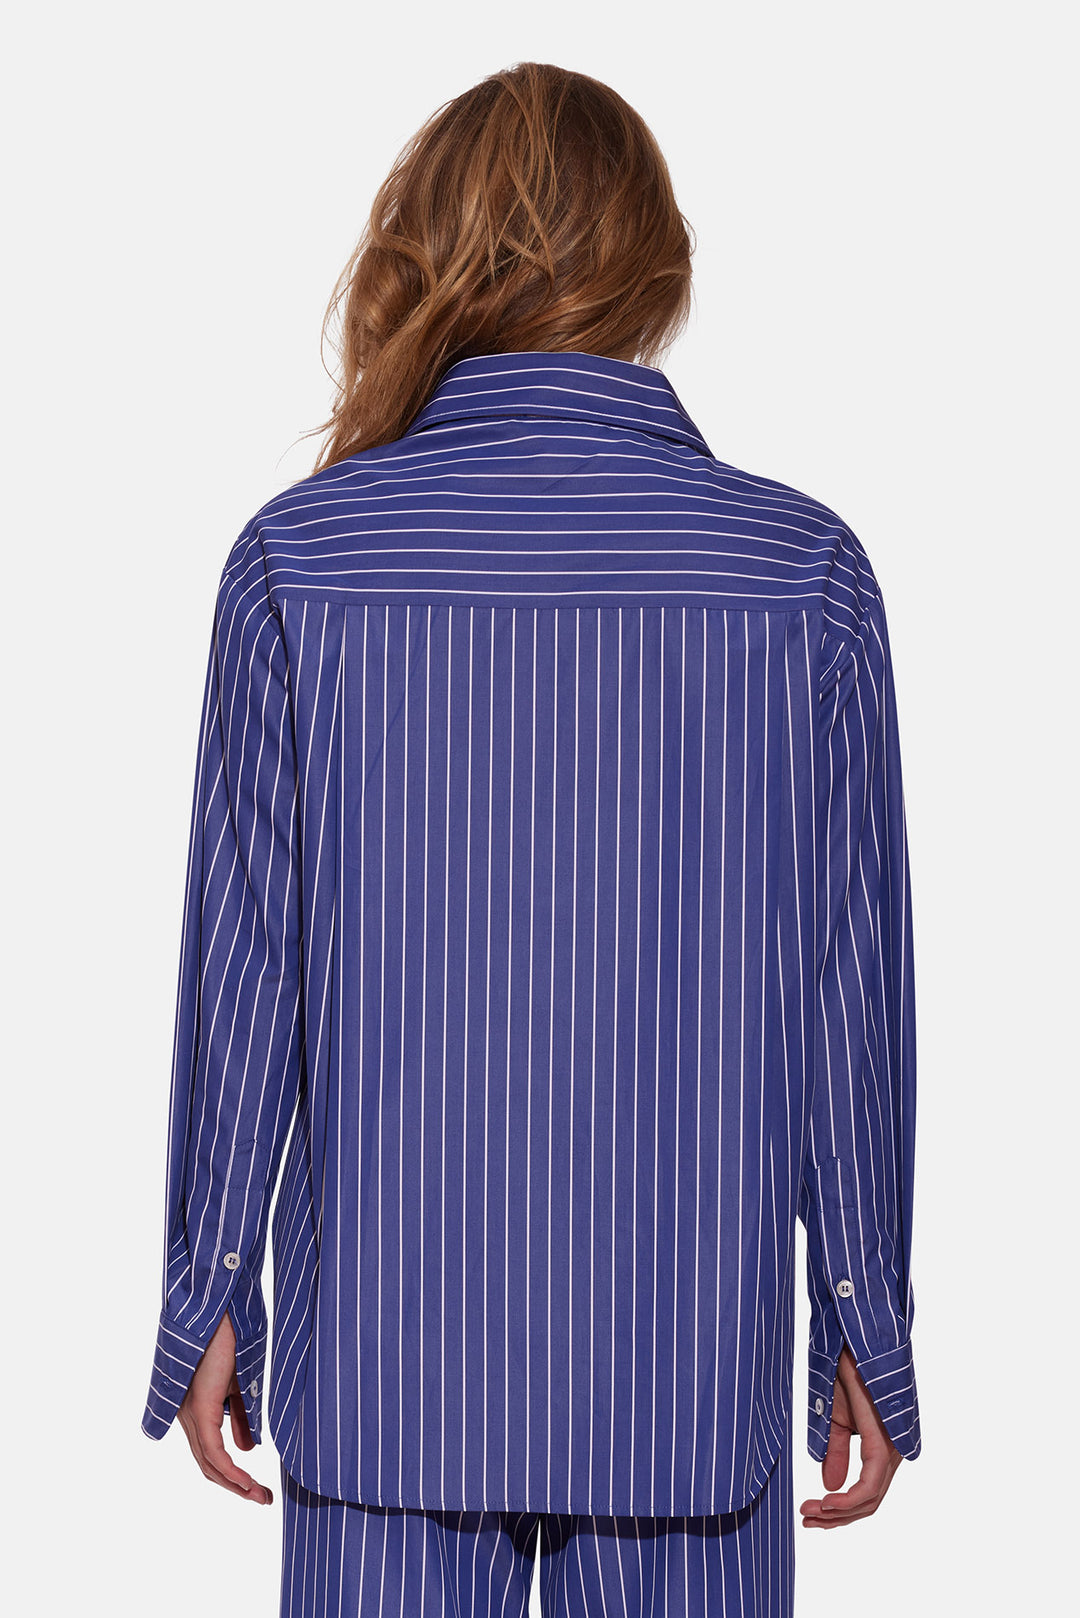 Lily Poplin Boyfriend Shirt Navy/White Stripe